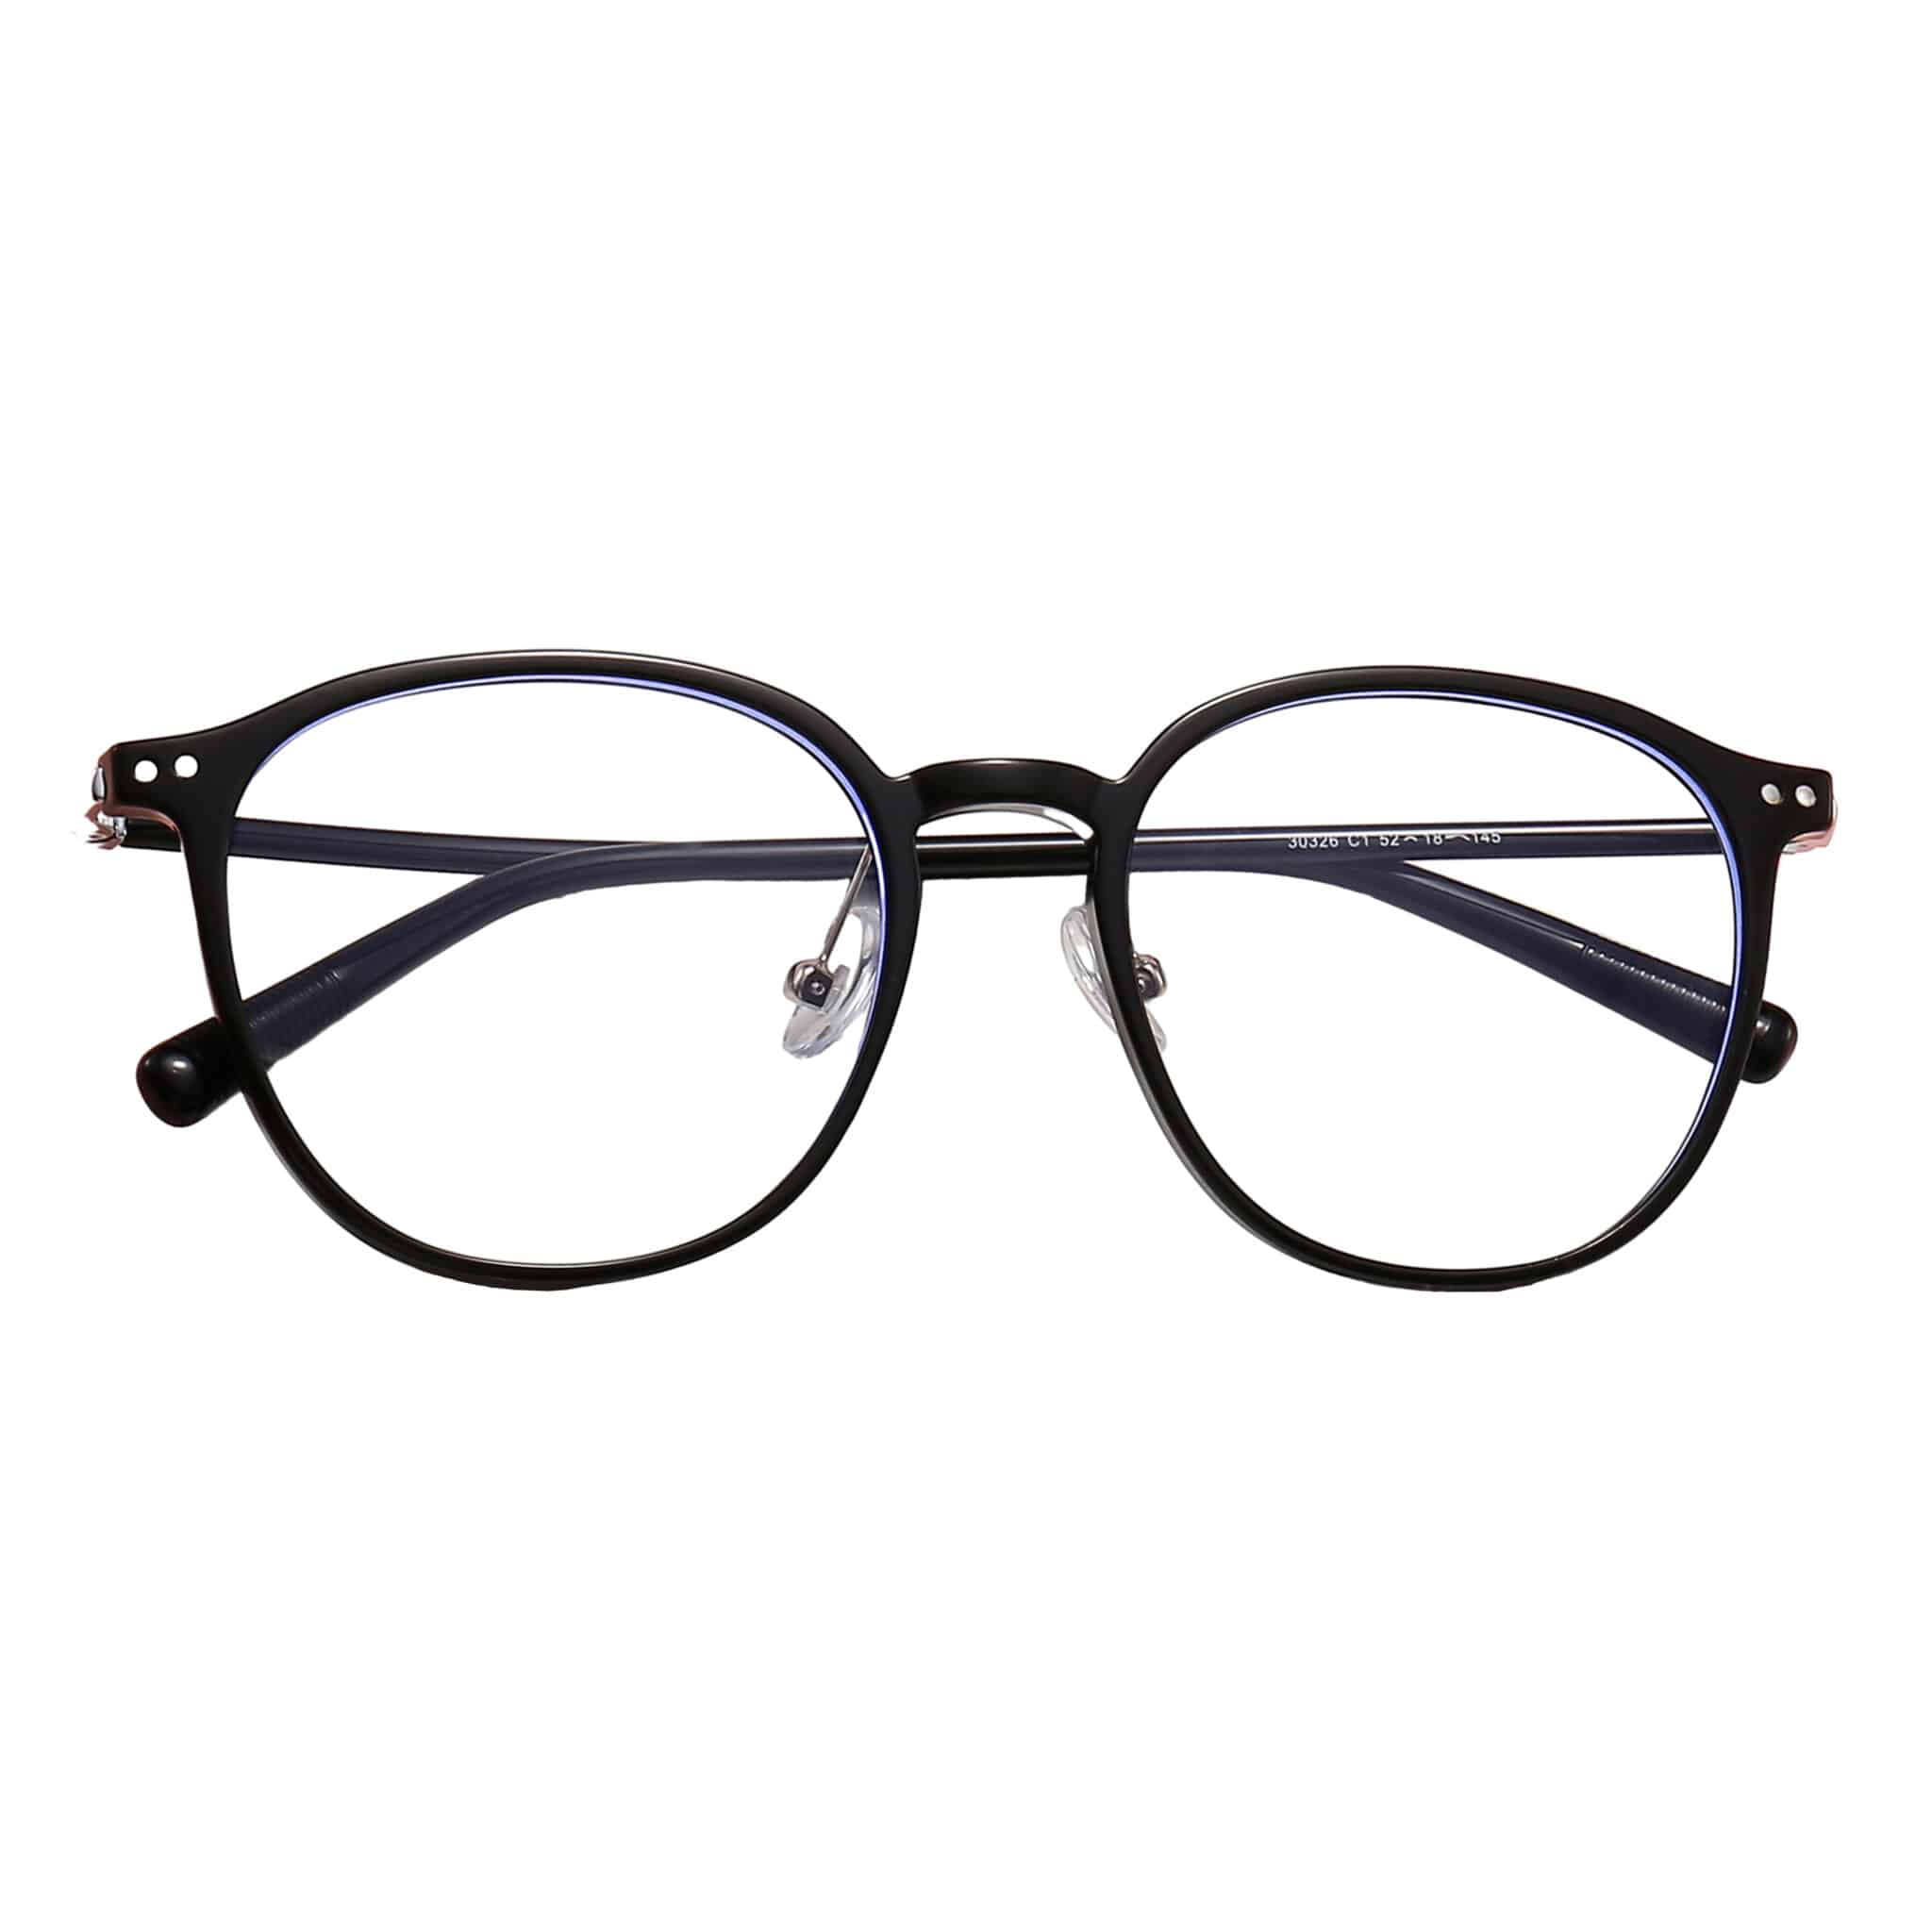 Round Tr90 Eyeglasses Online